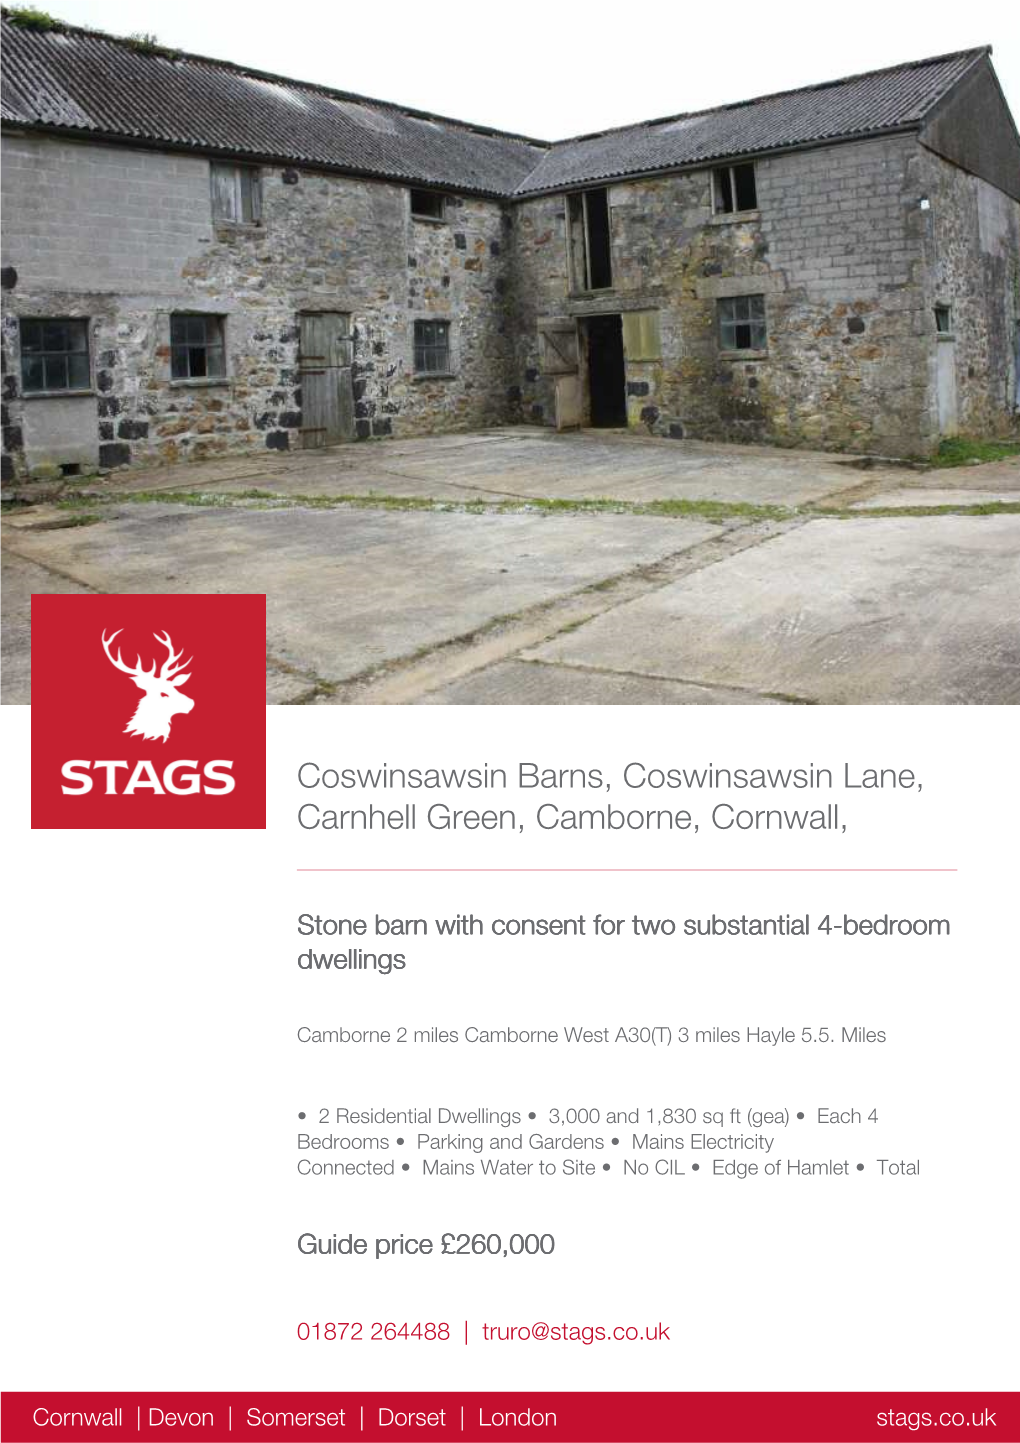 Coswinsawsin Barns, Coswinsawsin Lane, Carnhell Green, Camborne, Cornwall